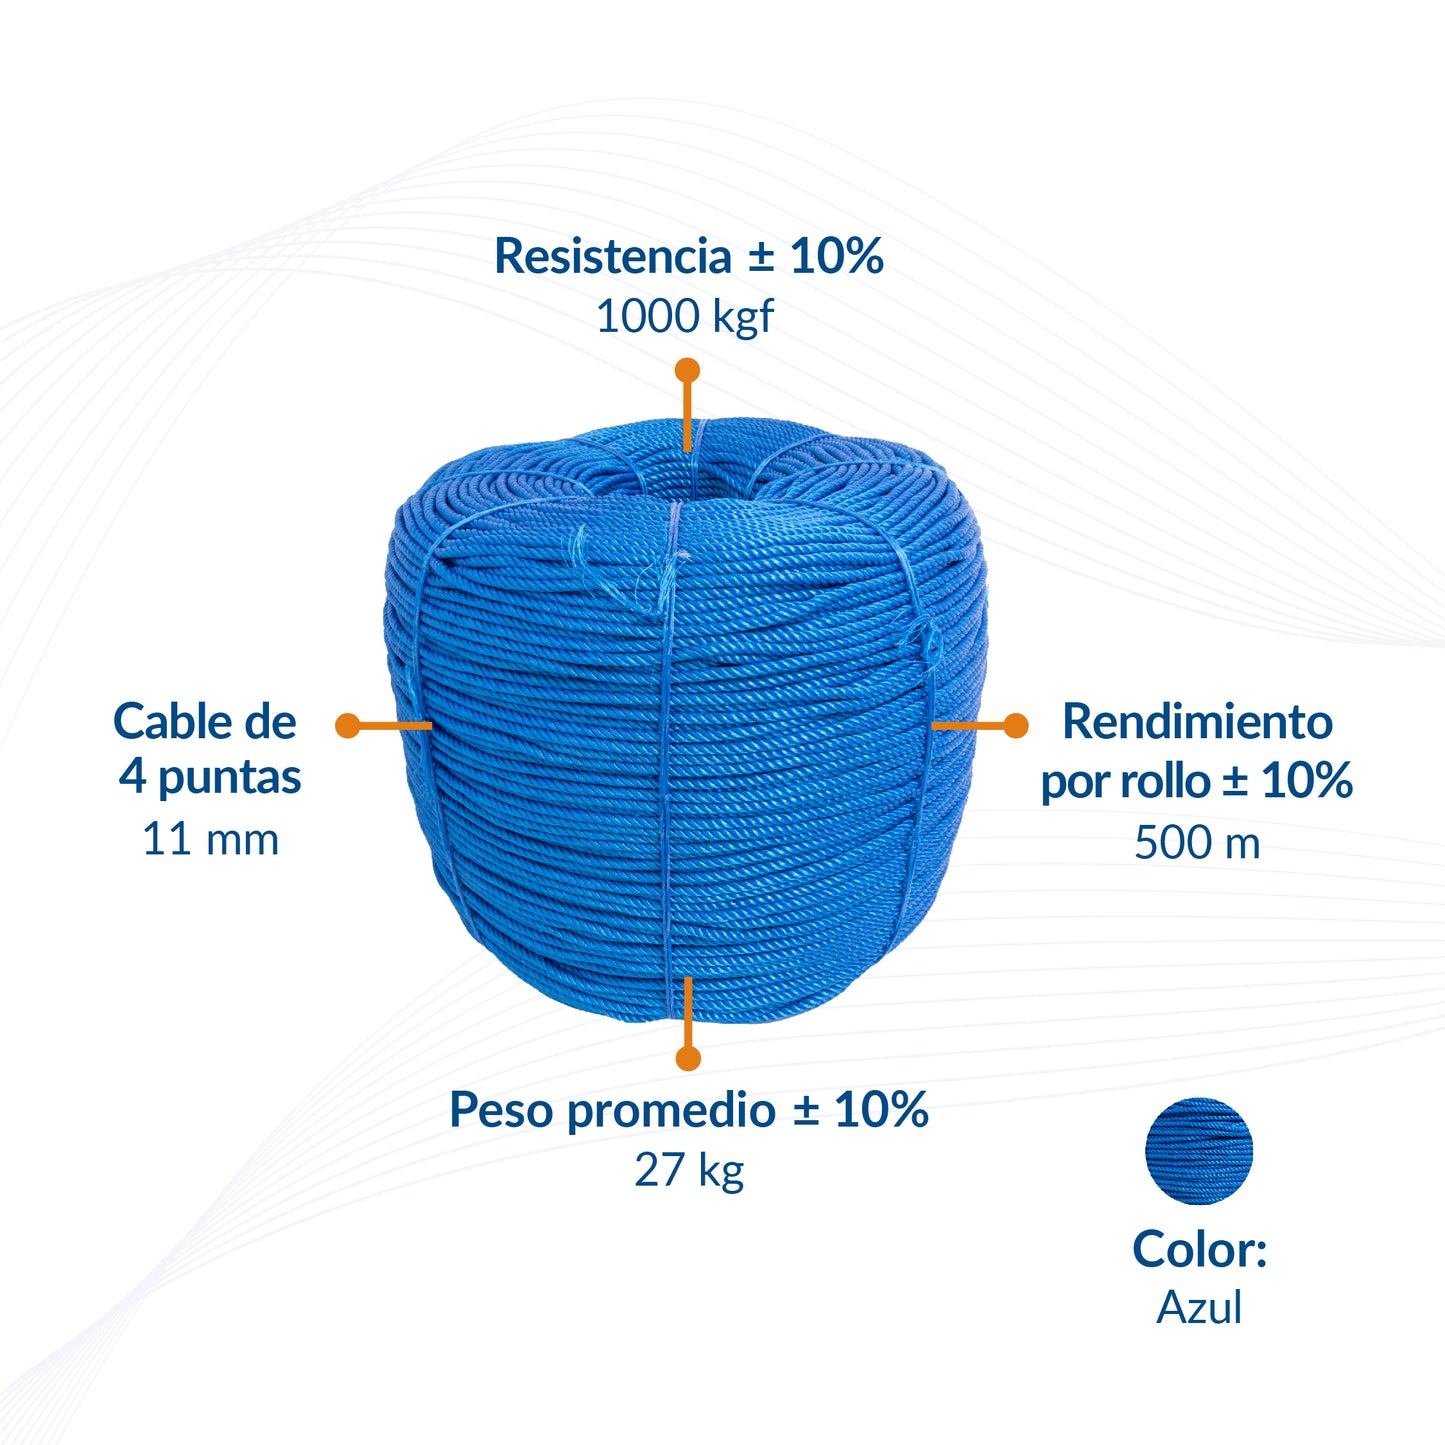 Cable de Polipropileno de 11 mm con 4 Puntas azul